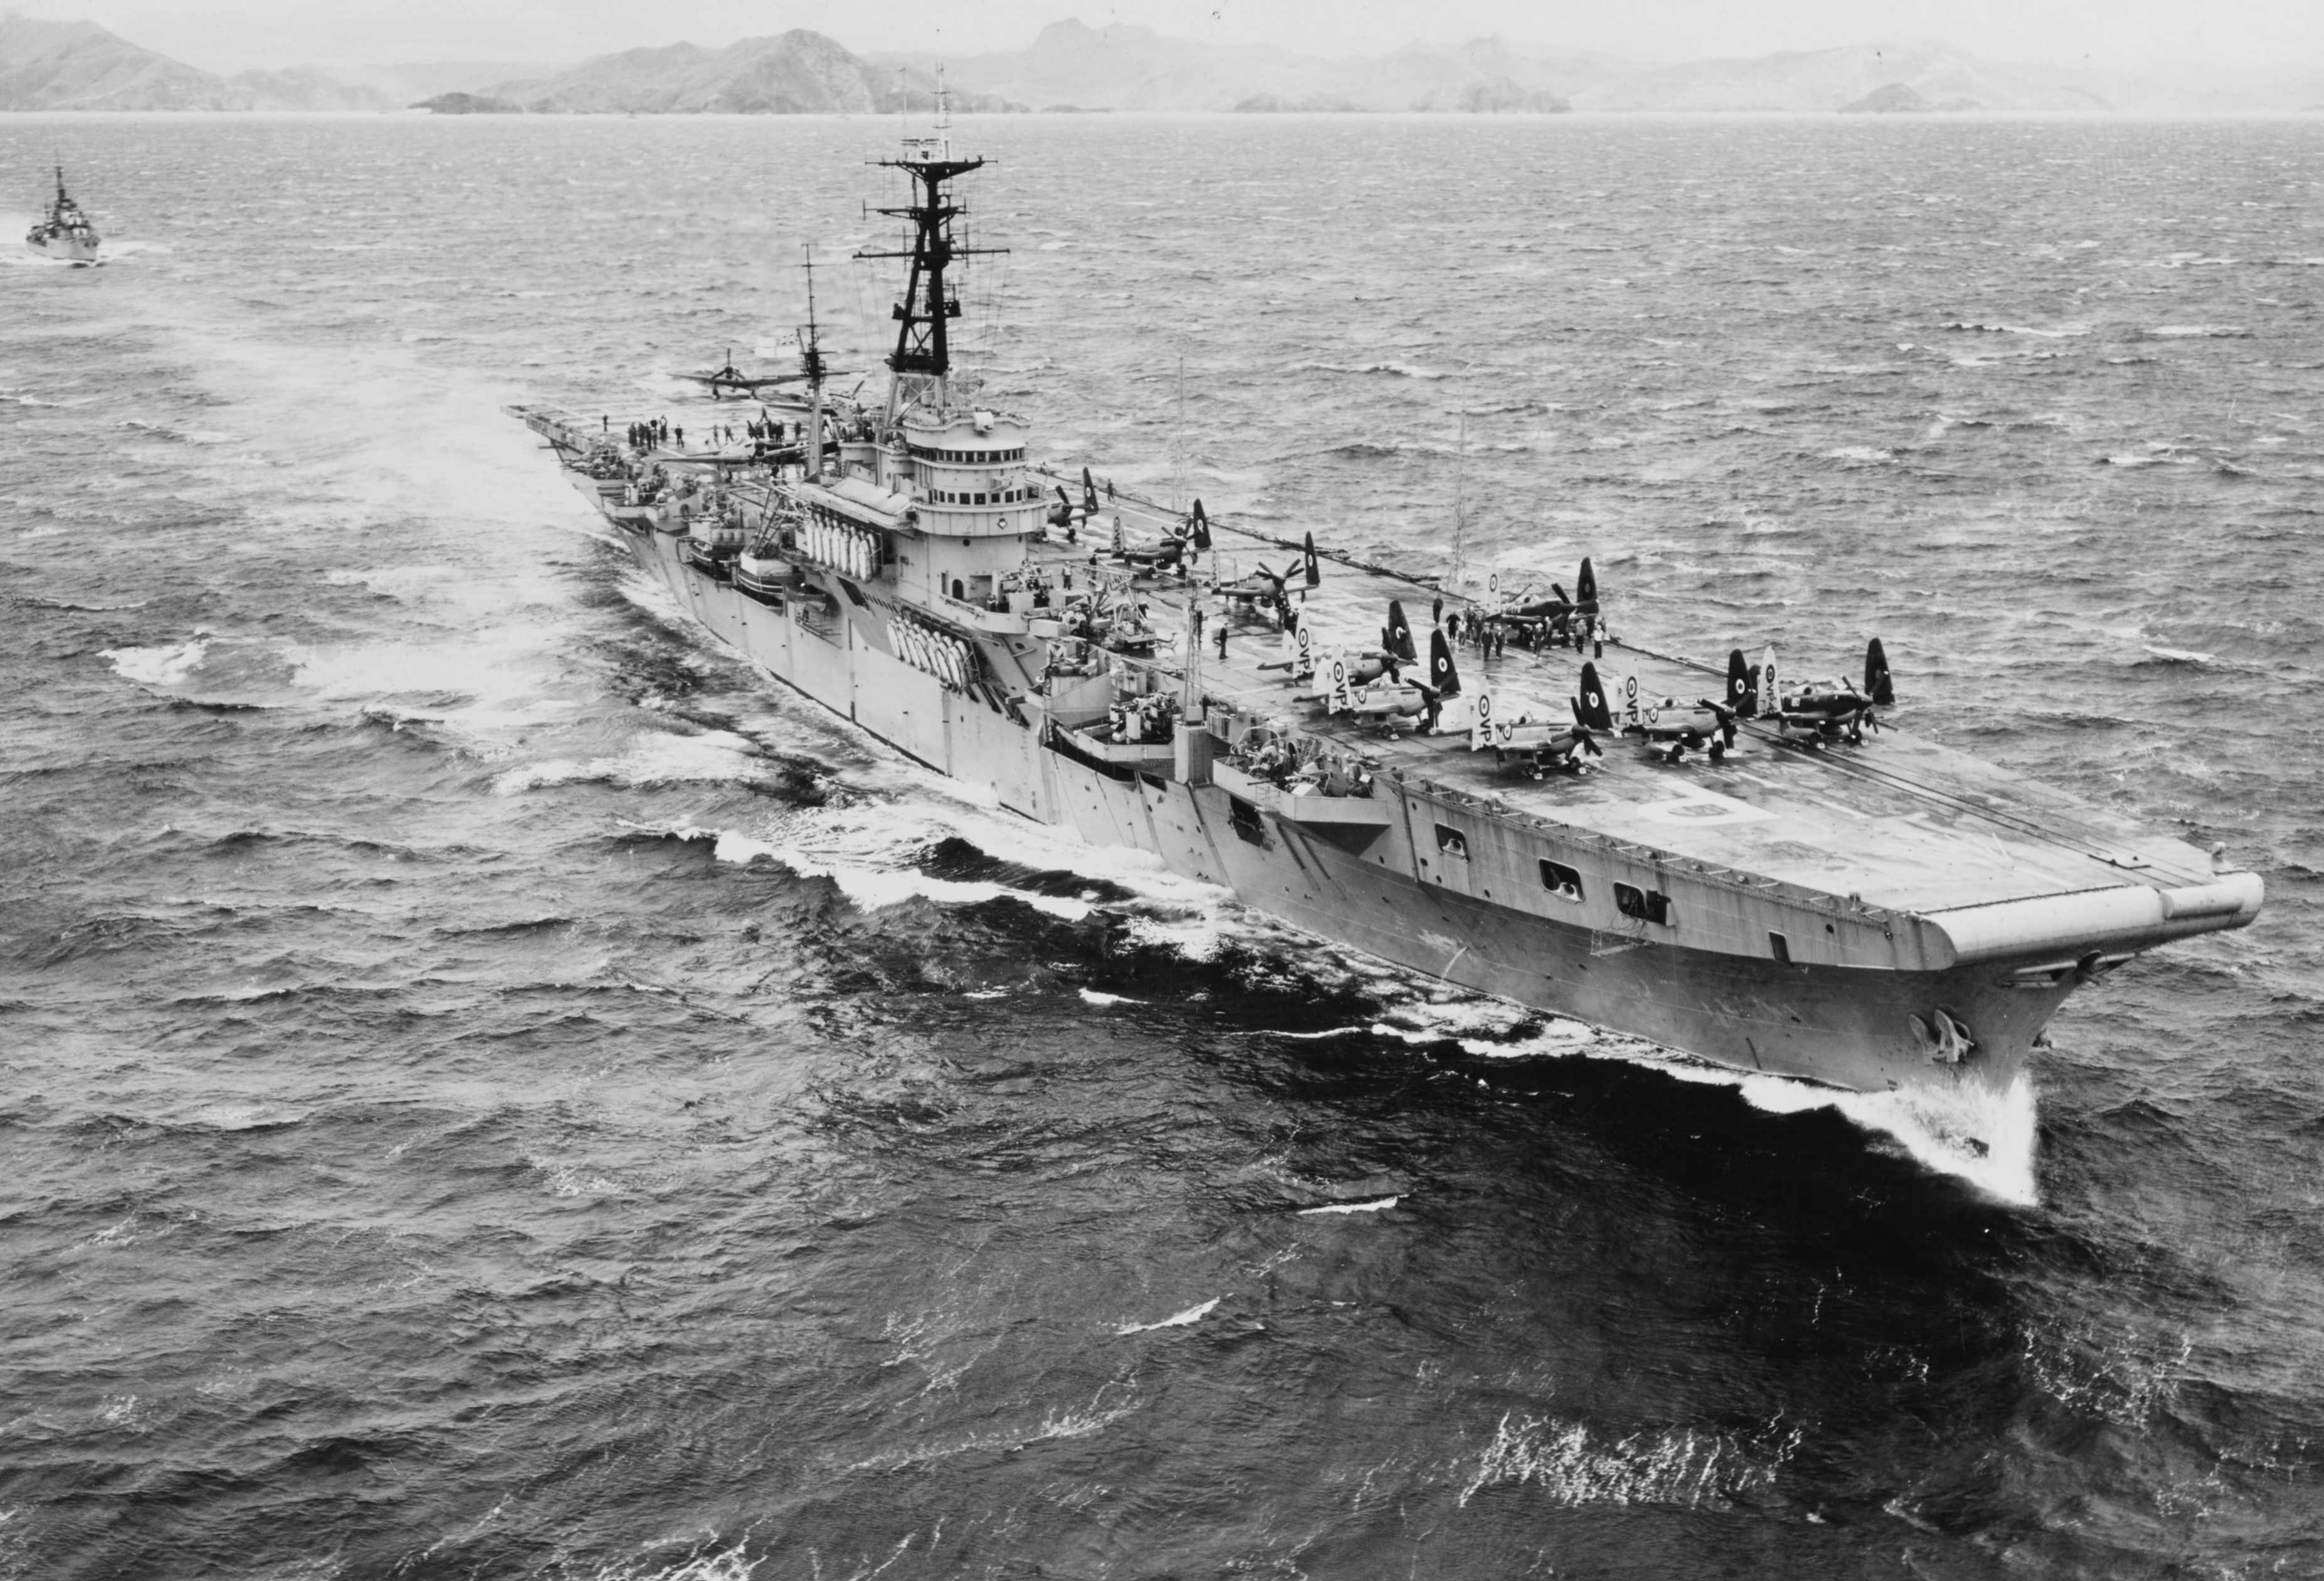 HMS TRIUMPH at sea